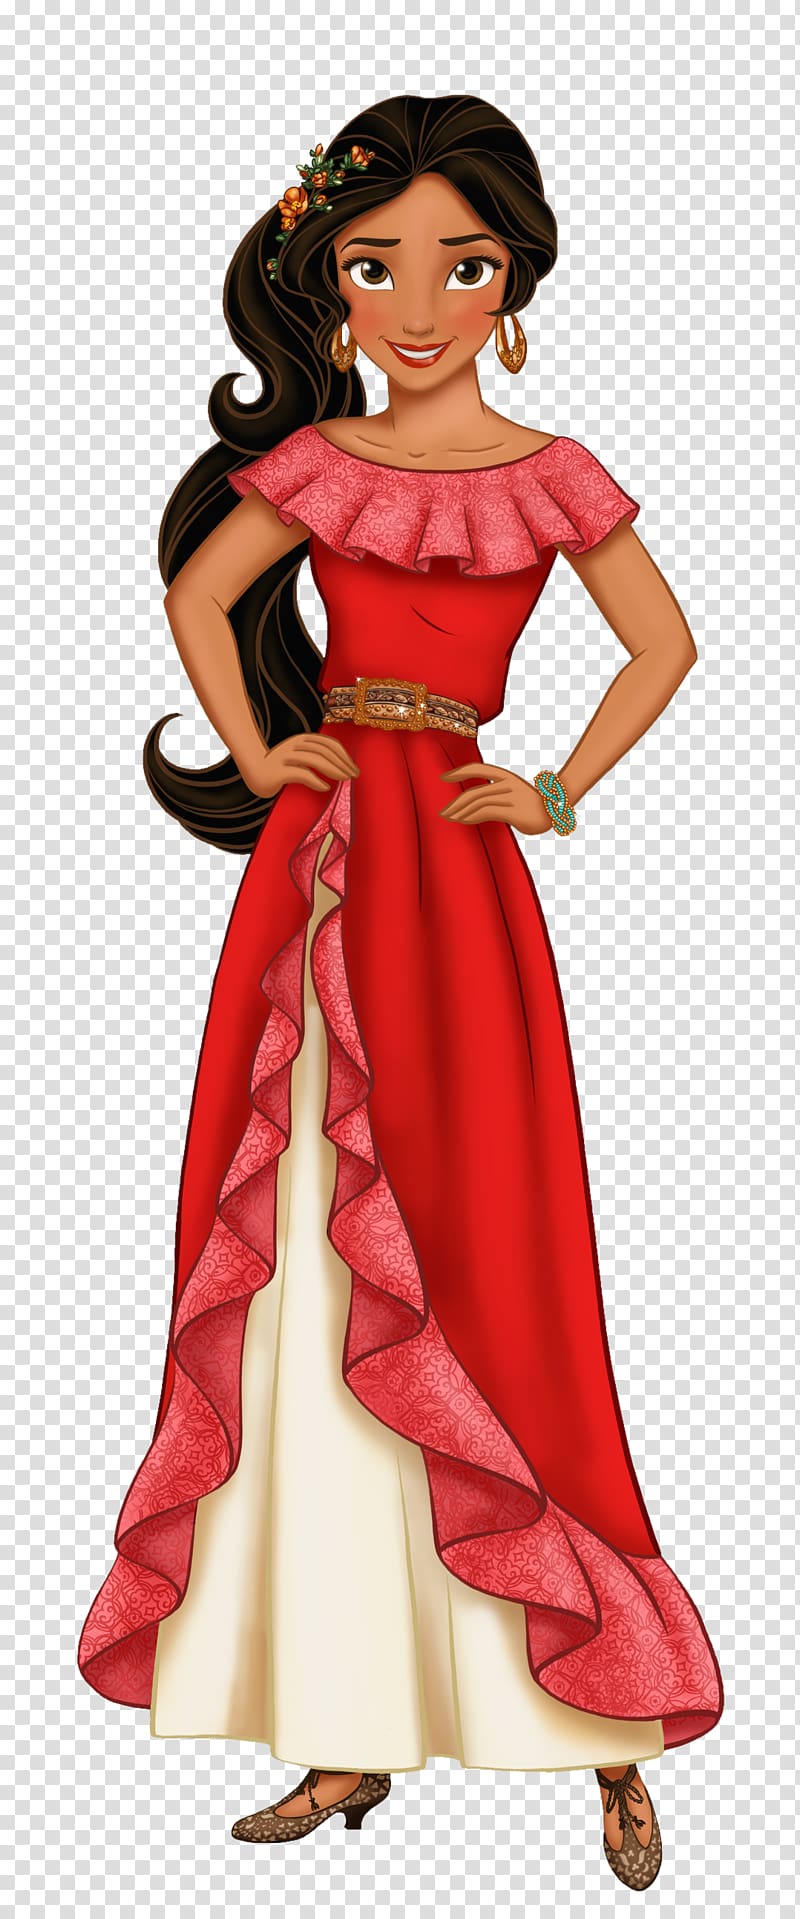 Disney Princess illustration, Elena of Avalor Disney Princess Disney Channel The Walt Disney Company Costume, princess jasmine transparent background PNG clipart